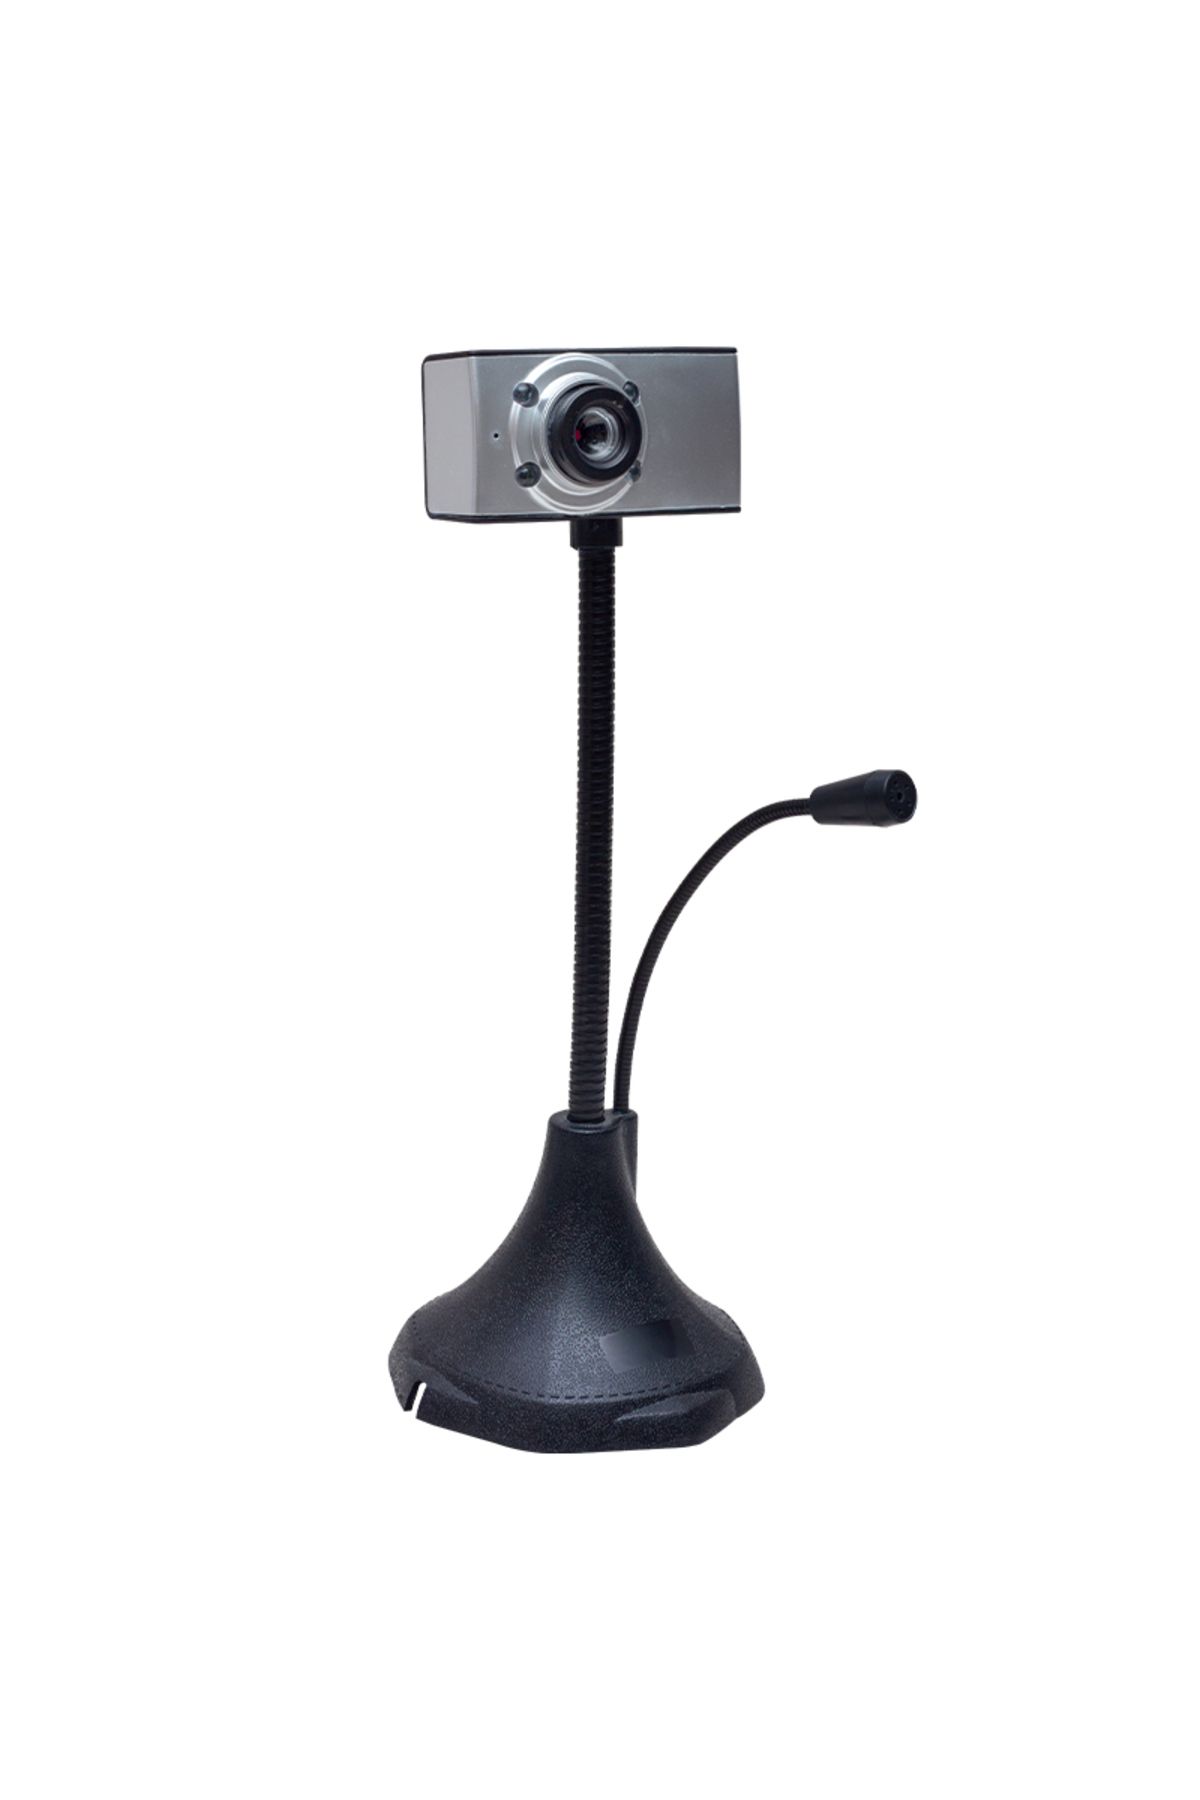 Genel Markalar Powermaster Pwr-2967 Cmos 640x480 Mikrofonlu 4 Ledli Usb Webcam